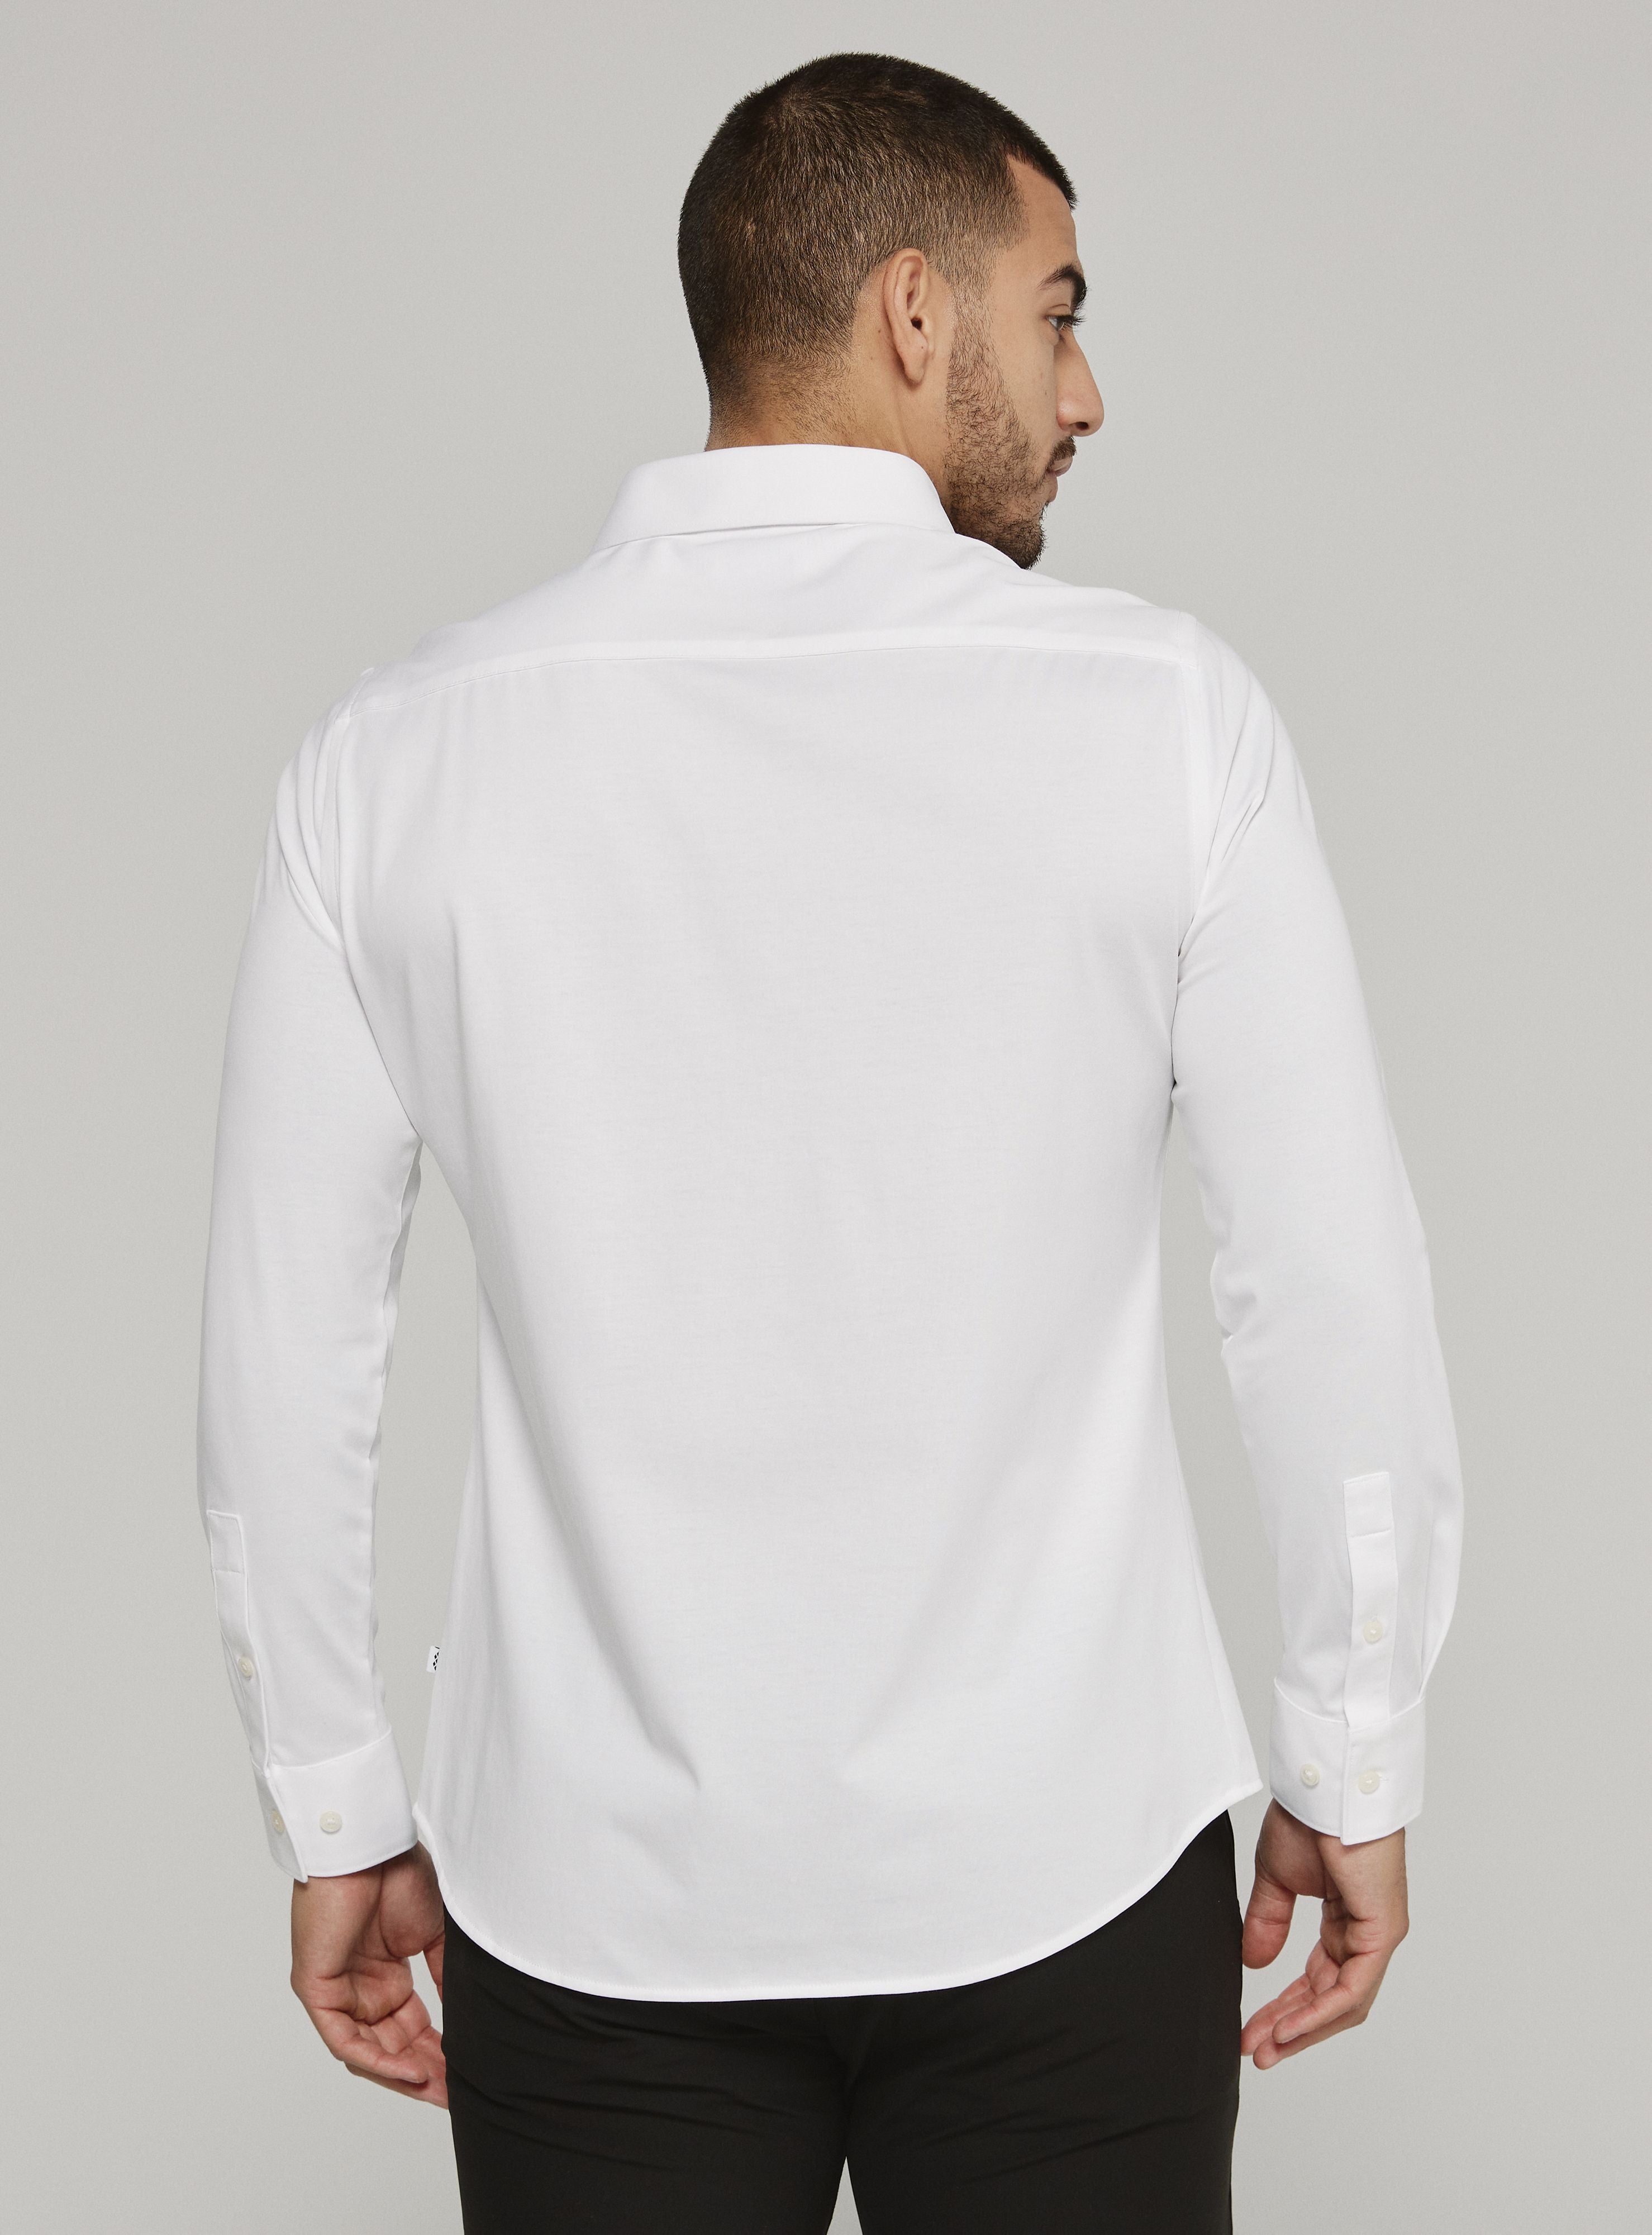 Girona Long Sleeve Shirt White